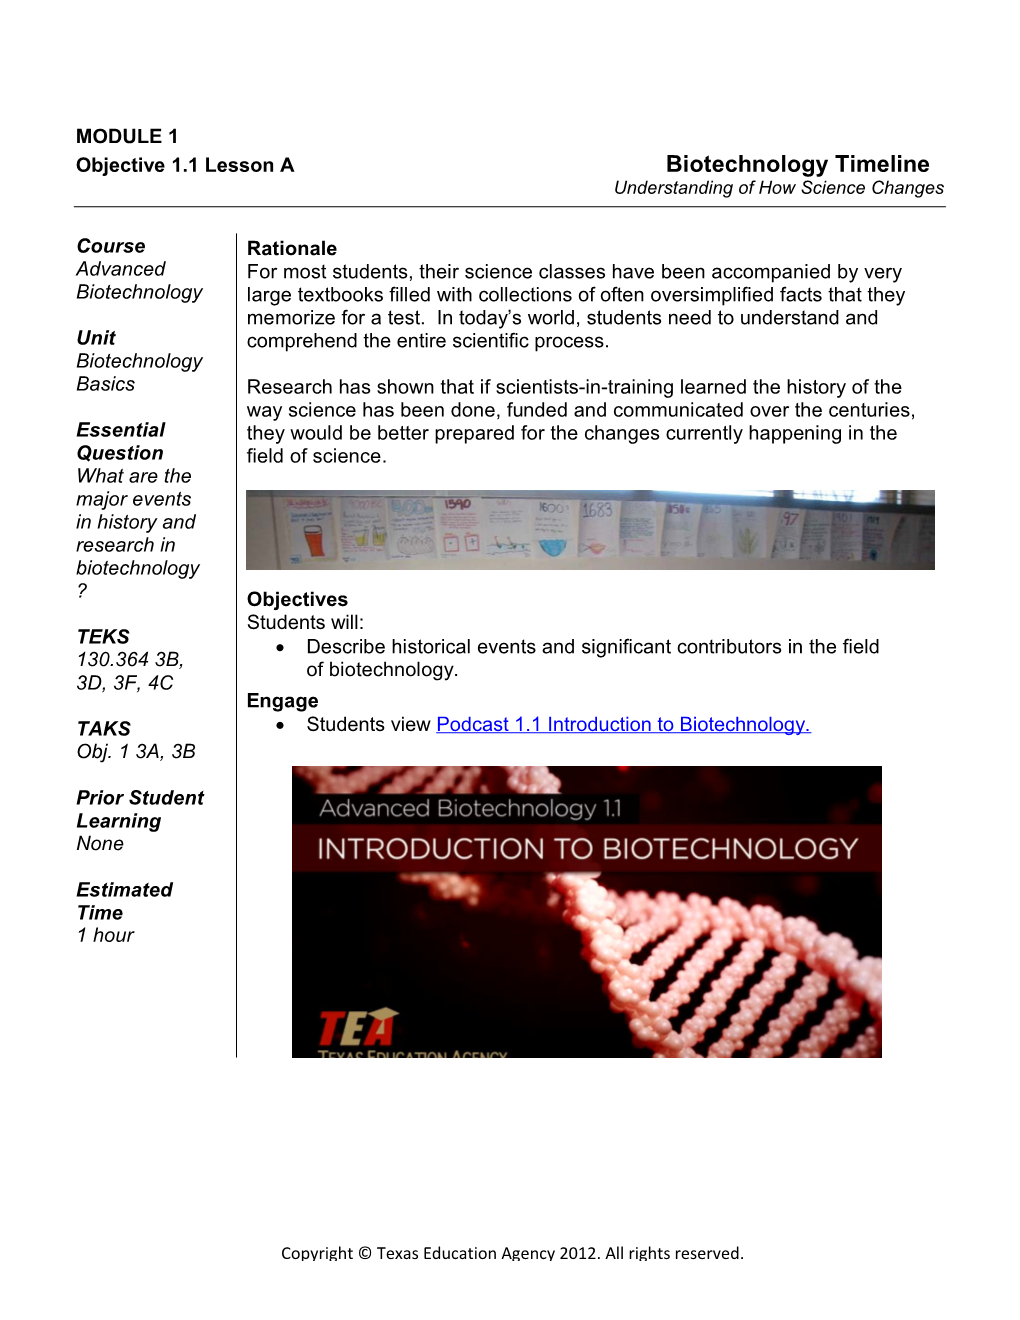 Objective 1.1 Lessona Biotechnologytimeline